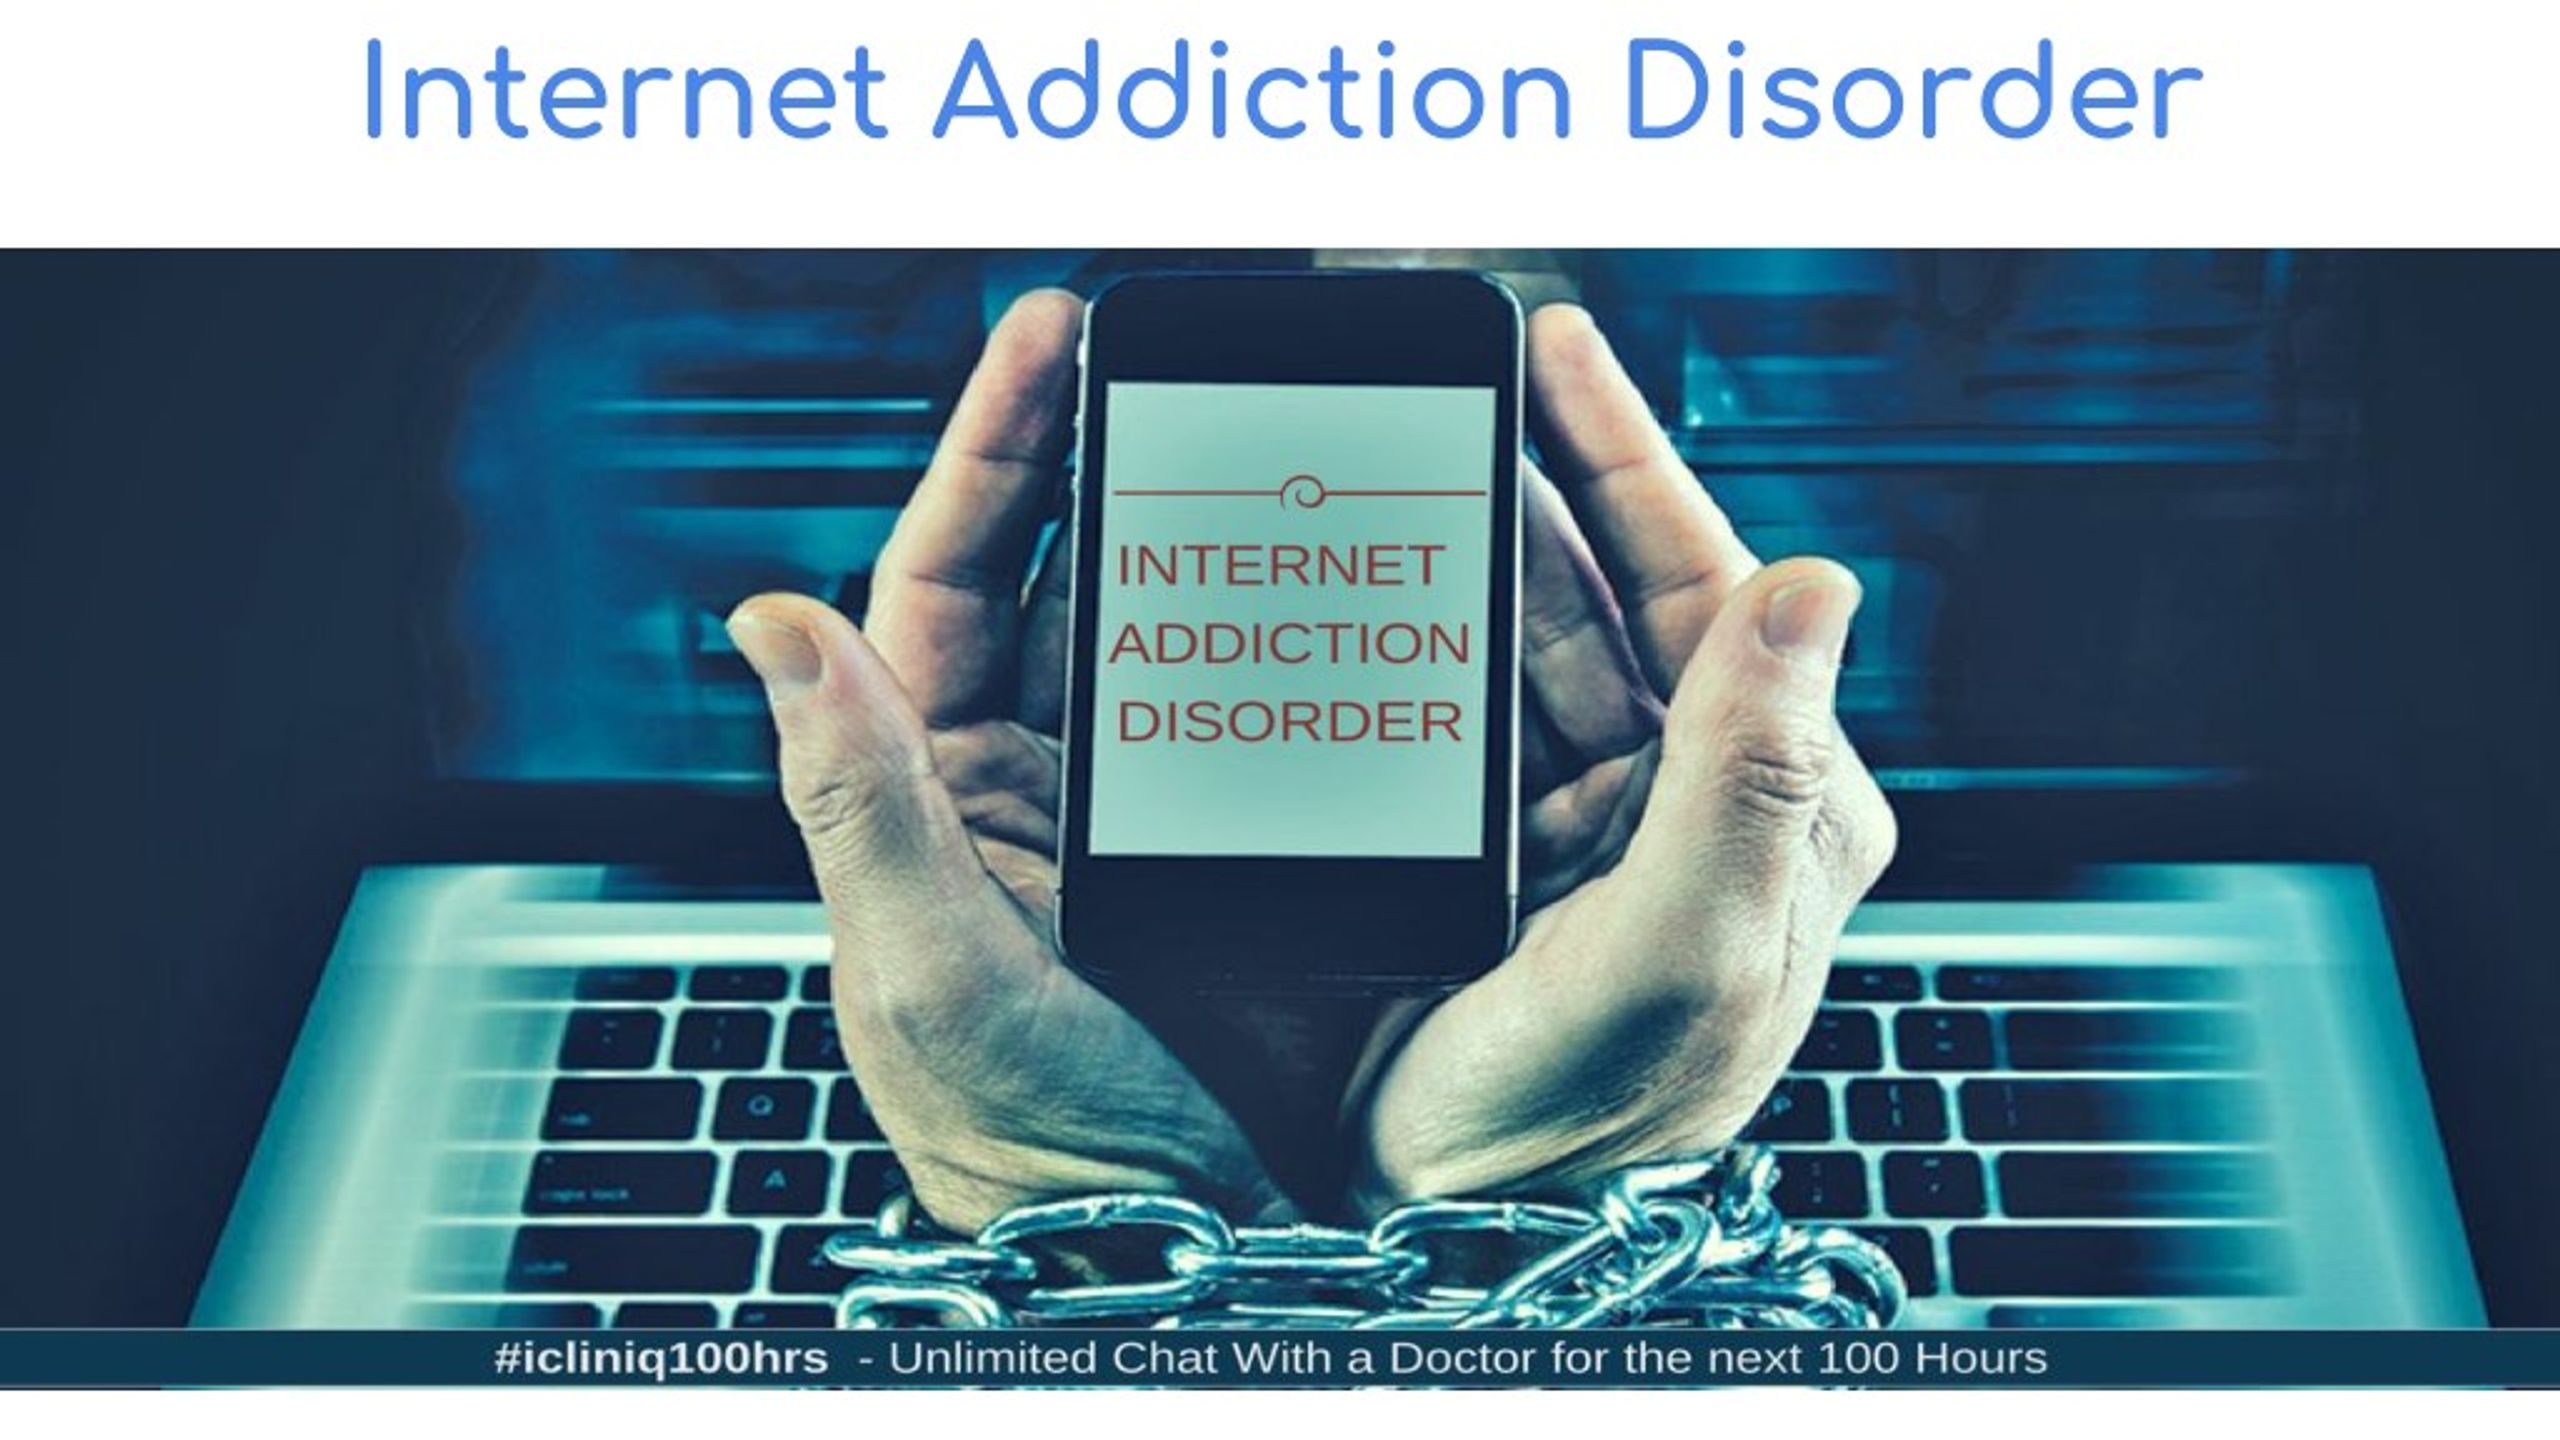 internet addiction powerpoint presentation